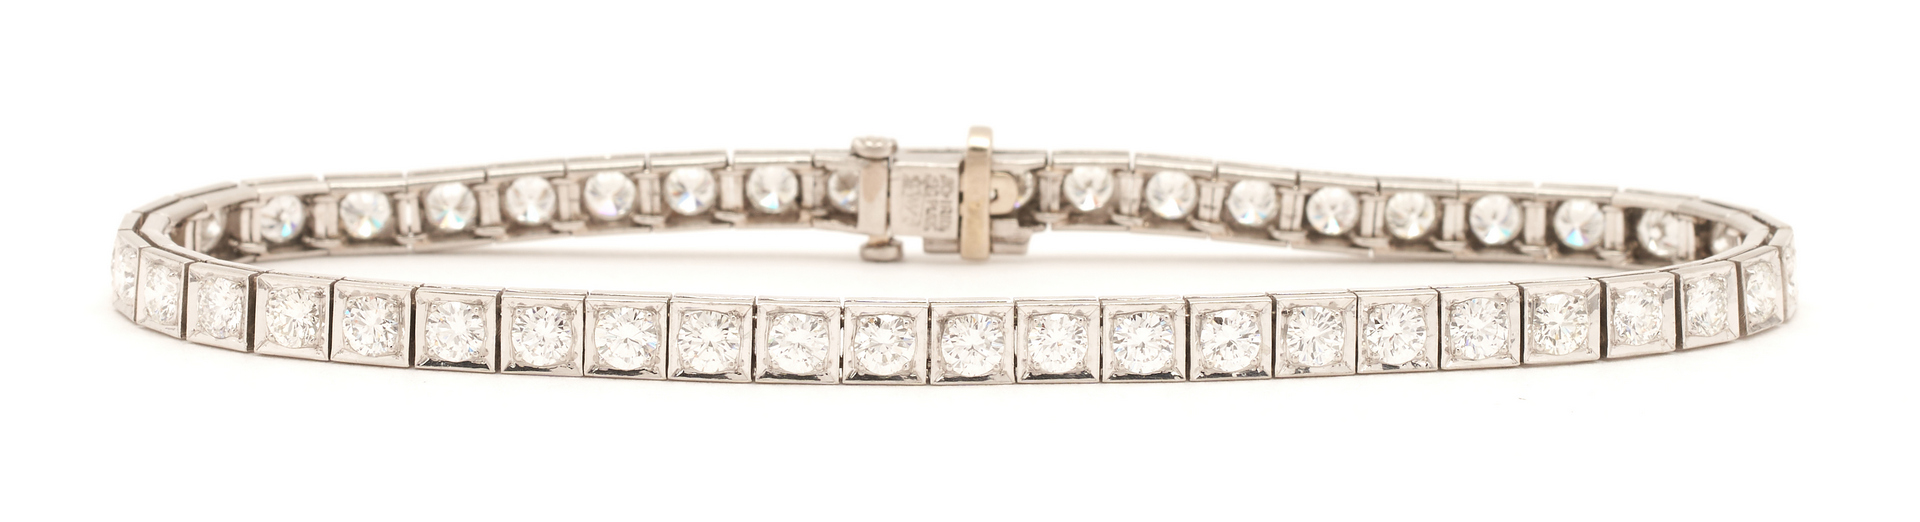 Lot 69: Ladies Platinum & Diamond Line Bracelet, 5.52 Carats Total